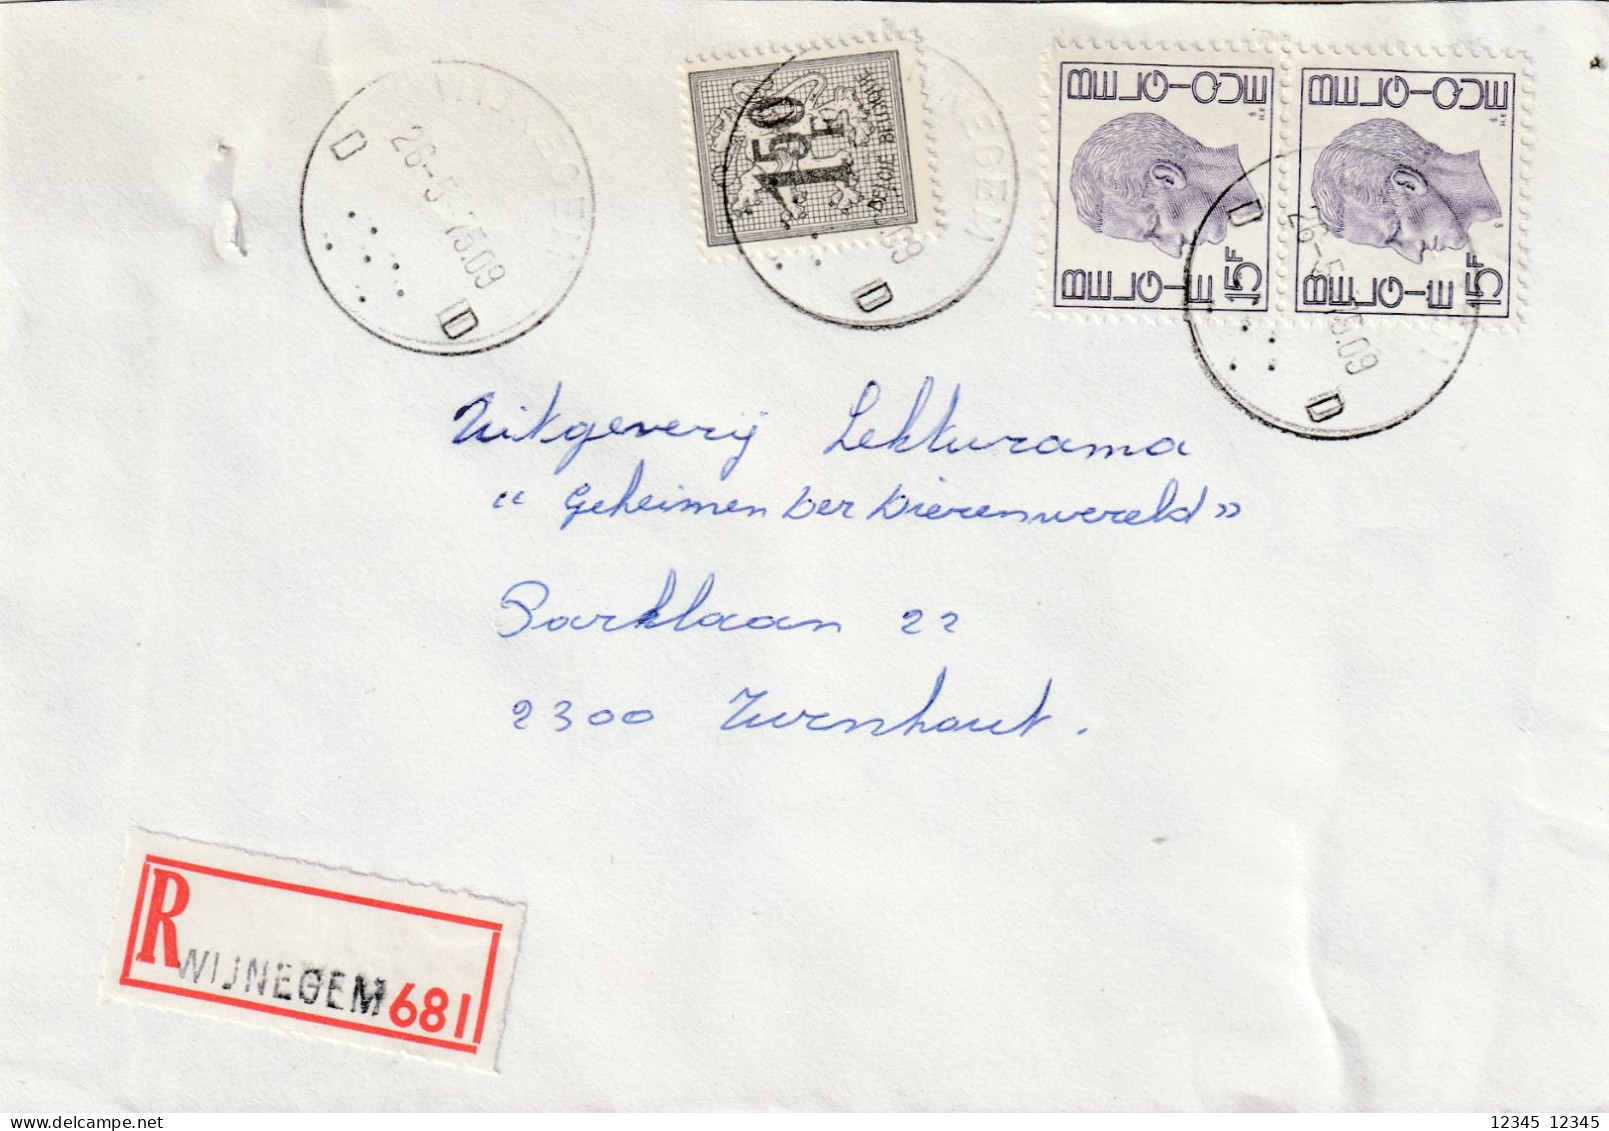 1975, Registered Letter Wijnegem - Lettres & Documents